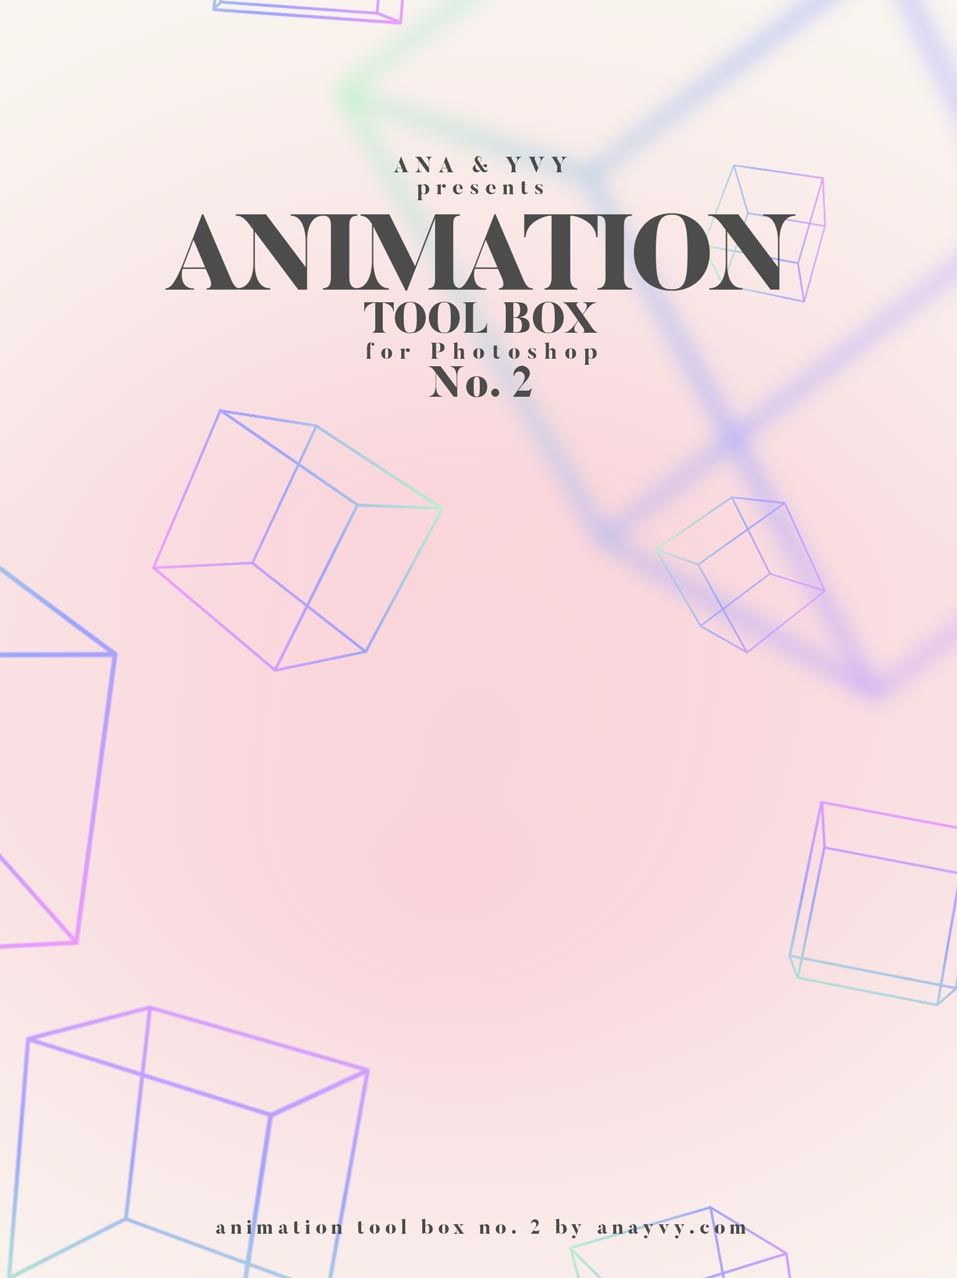 Animated Clipart | Animation Tool Box No. 2 - ANA & YVY